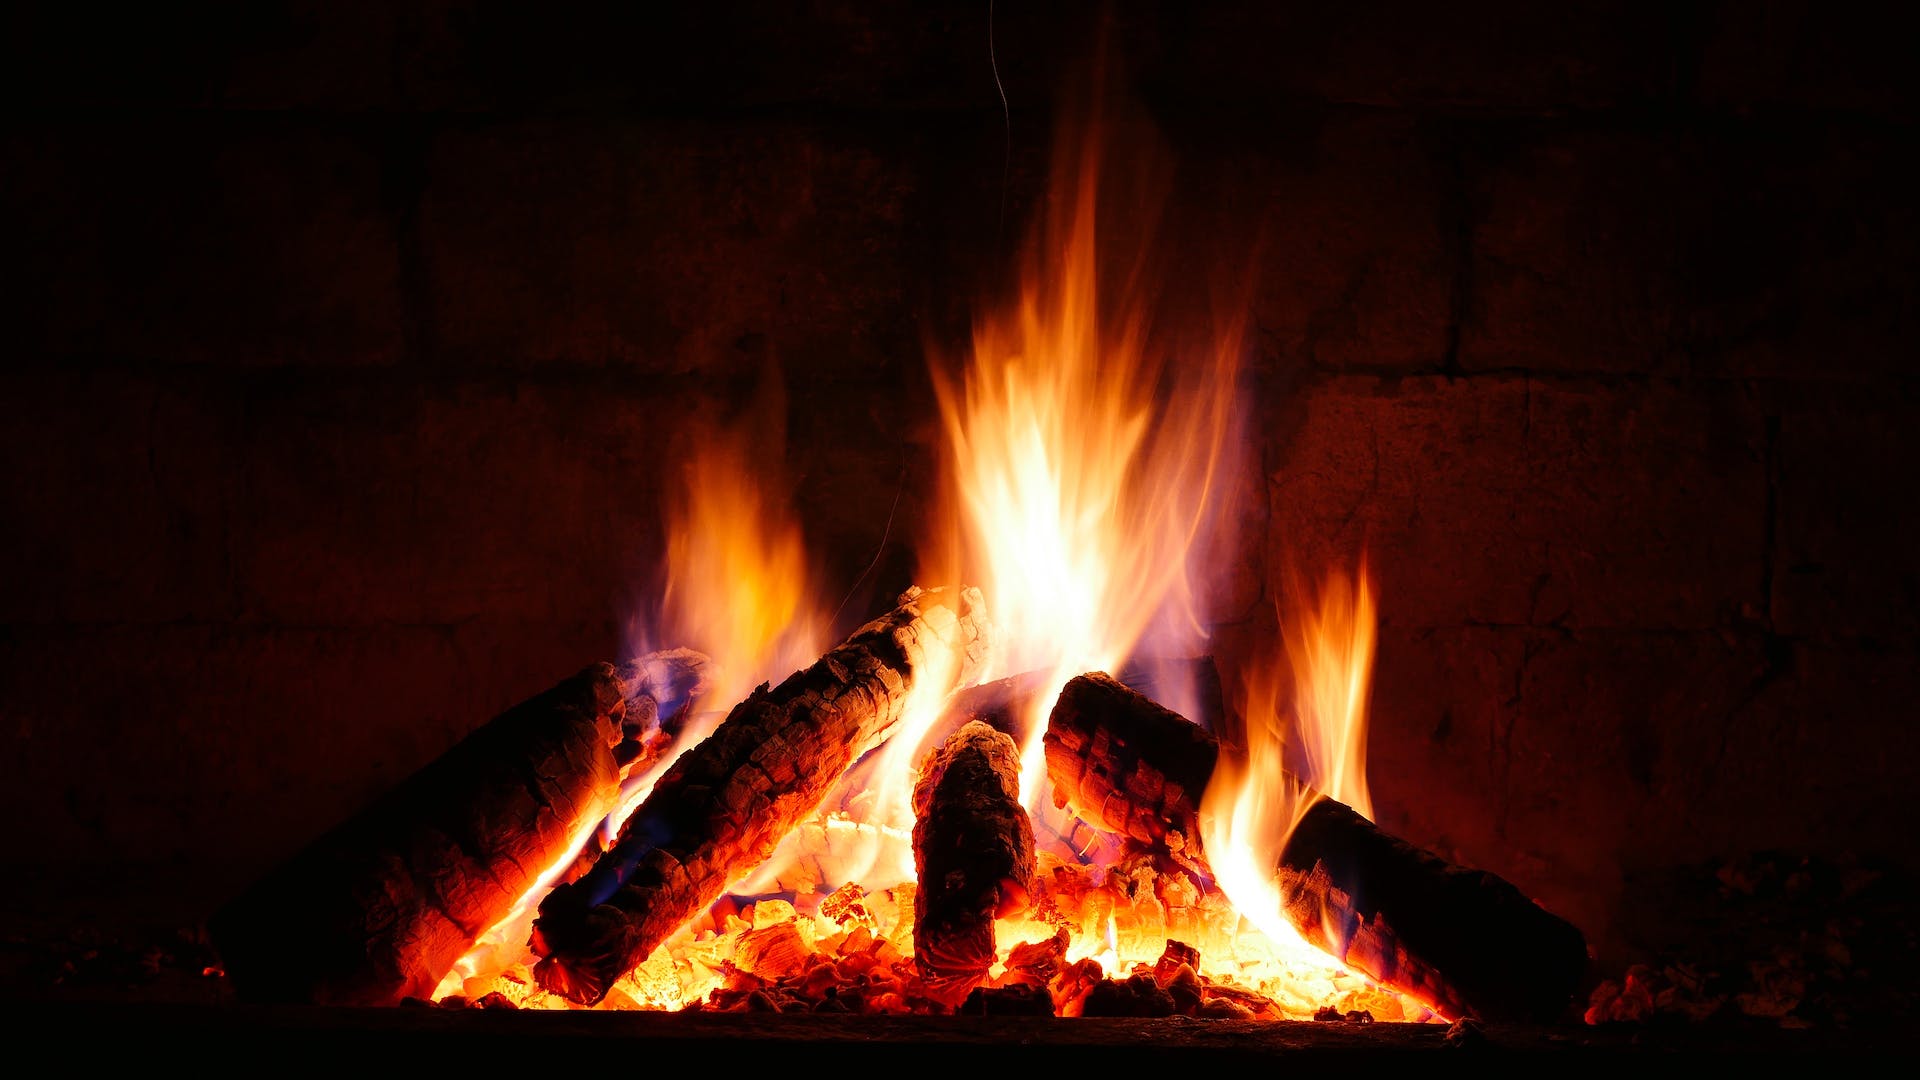 A lit fireplace | Source: Pexels